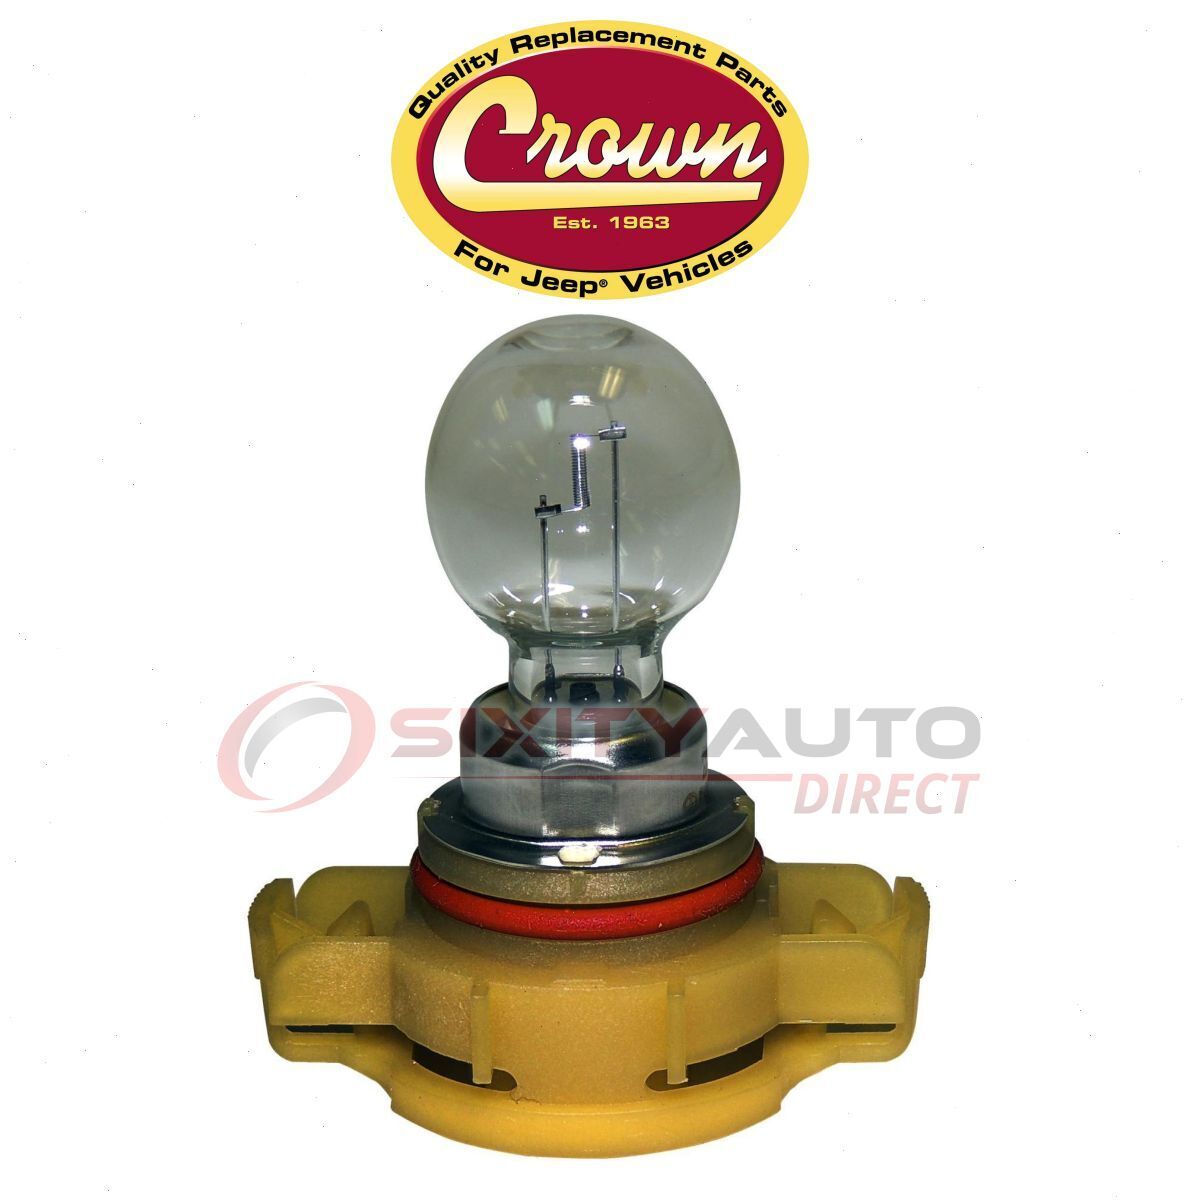 Crown Automotive Fog Light Bulb for 2011-2012 Chrysler 200 - Electrical pu